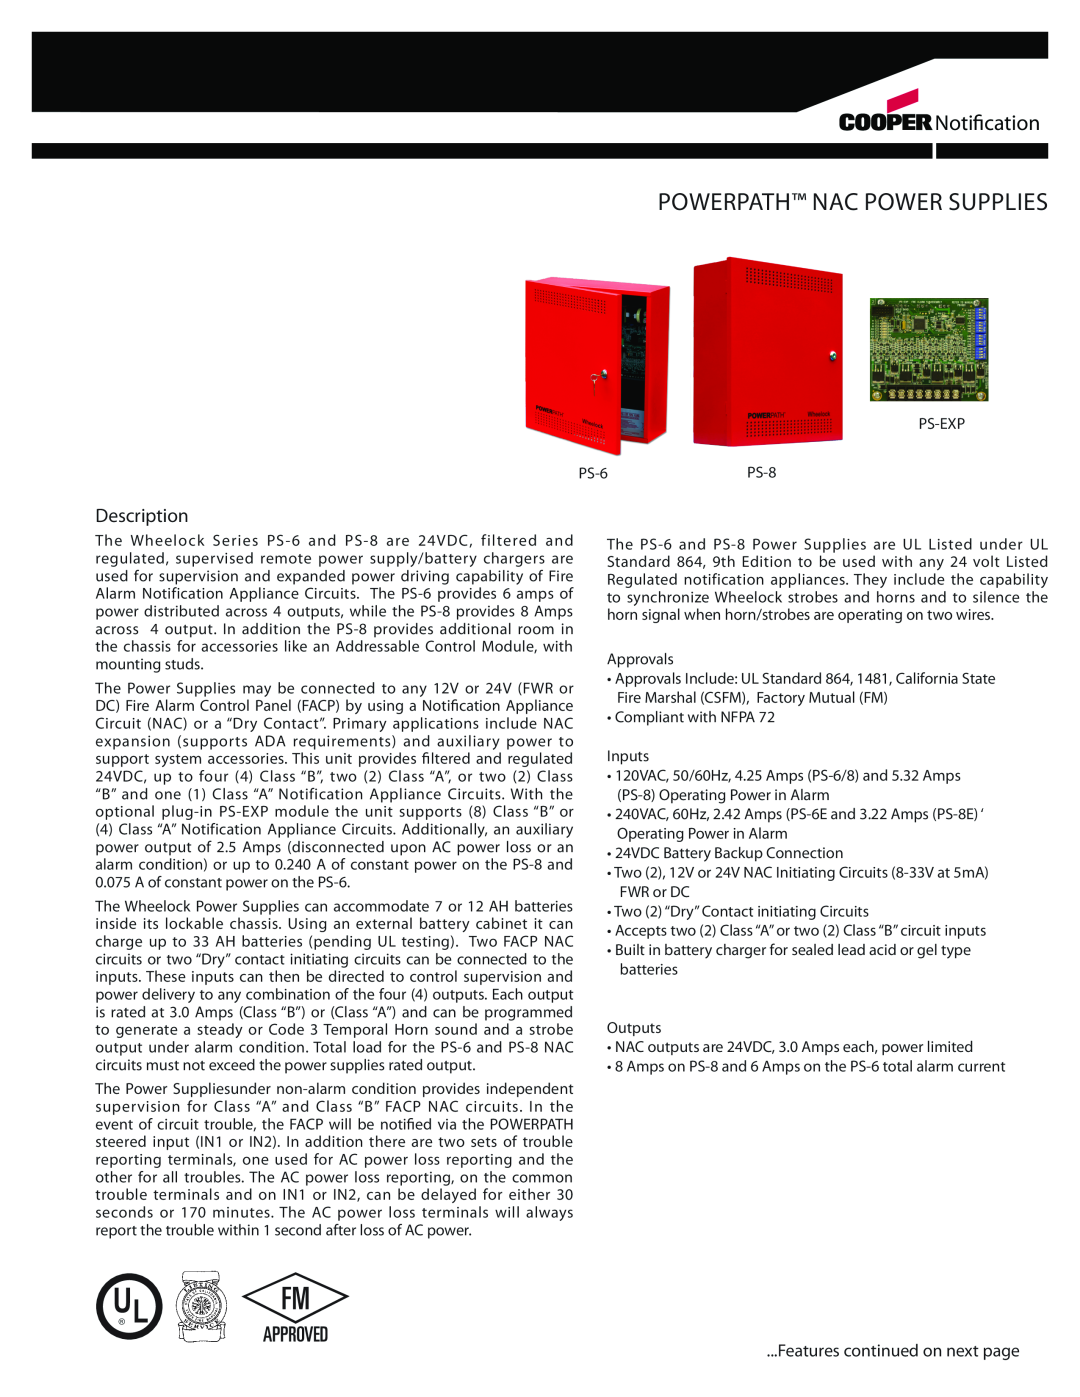 Cooper Bussmann PS-8, PS-EXP, PS-6 manual Notification, Powerpath Nac Power Supplies, Description 